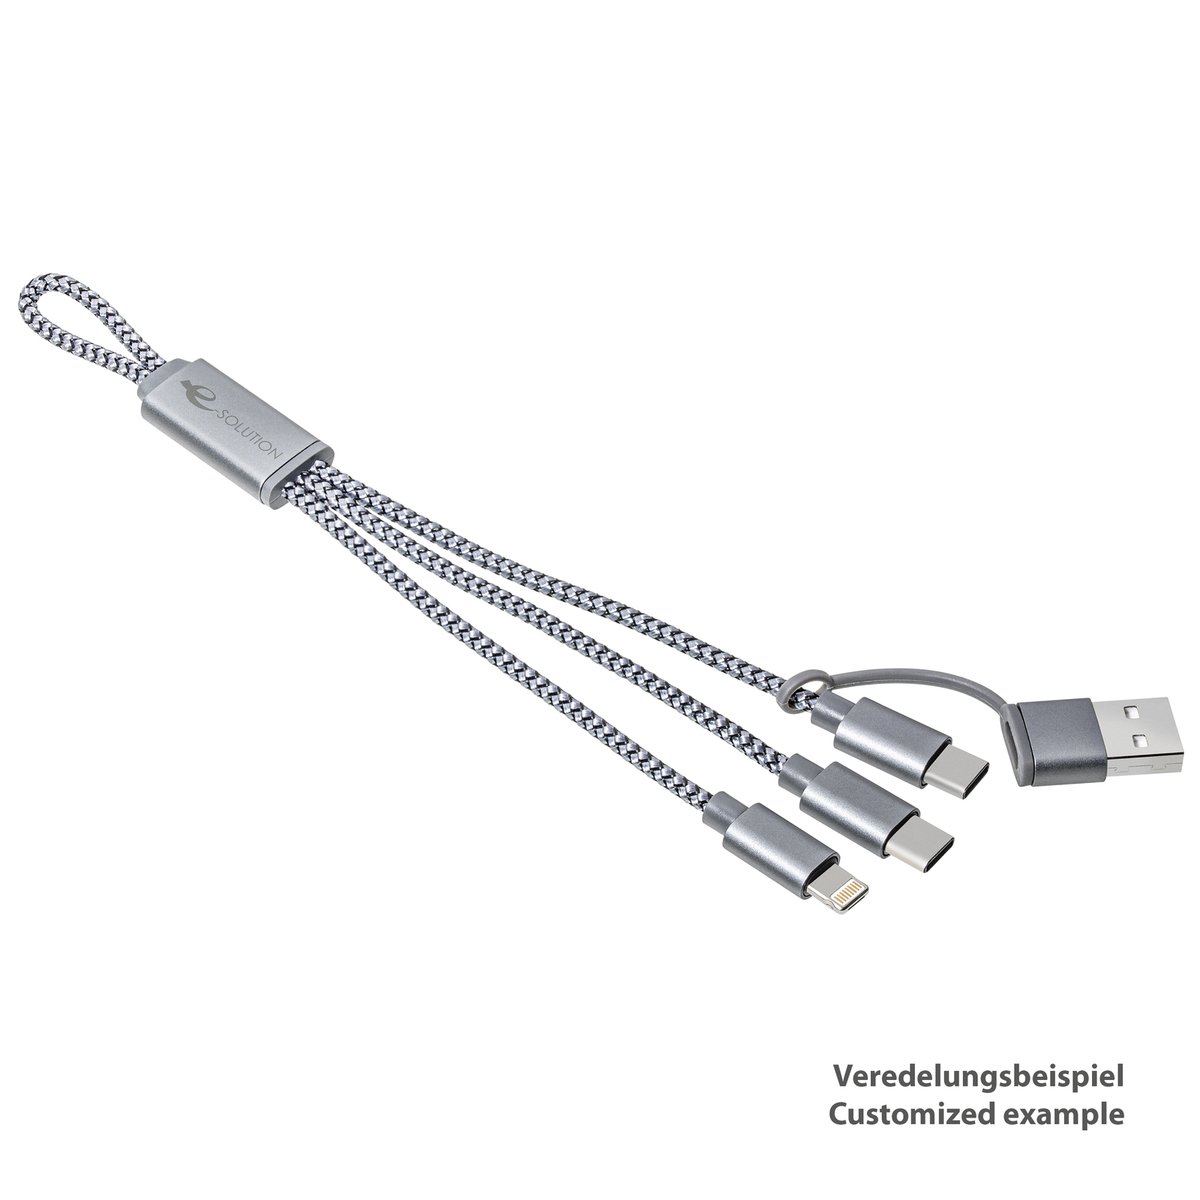 4-in-1 Charging Cable REEVES-EDINBURGH grey